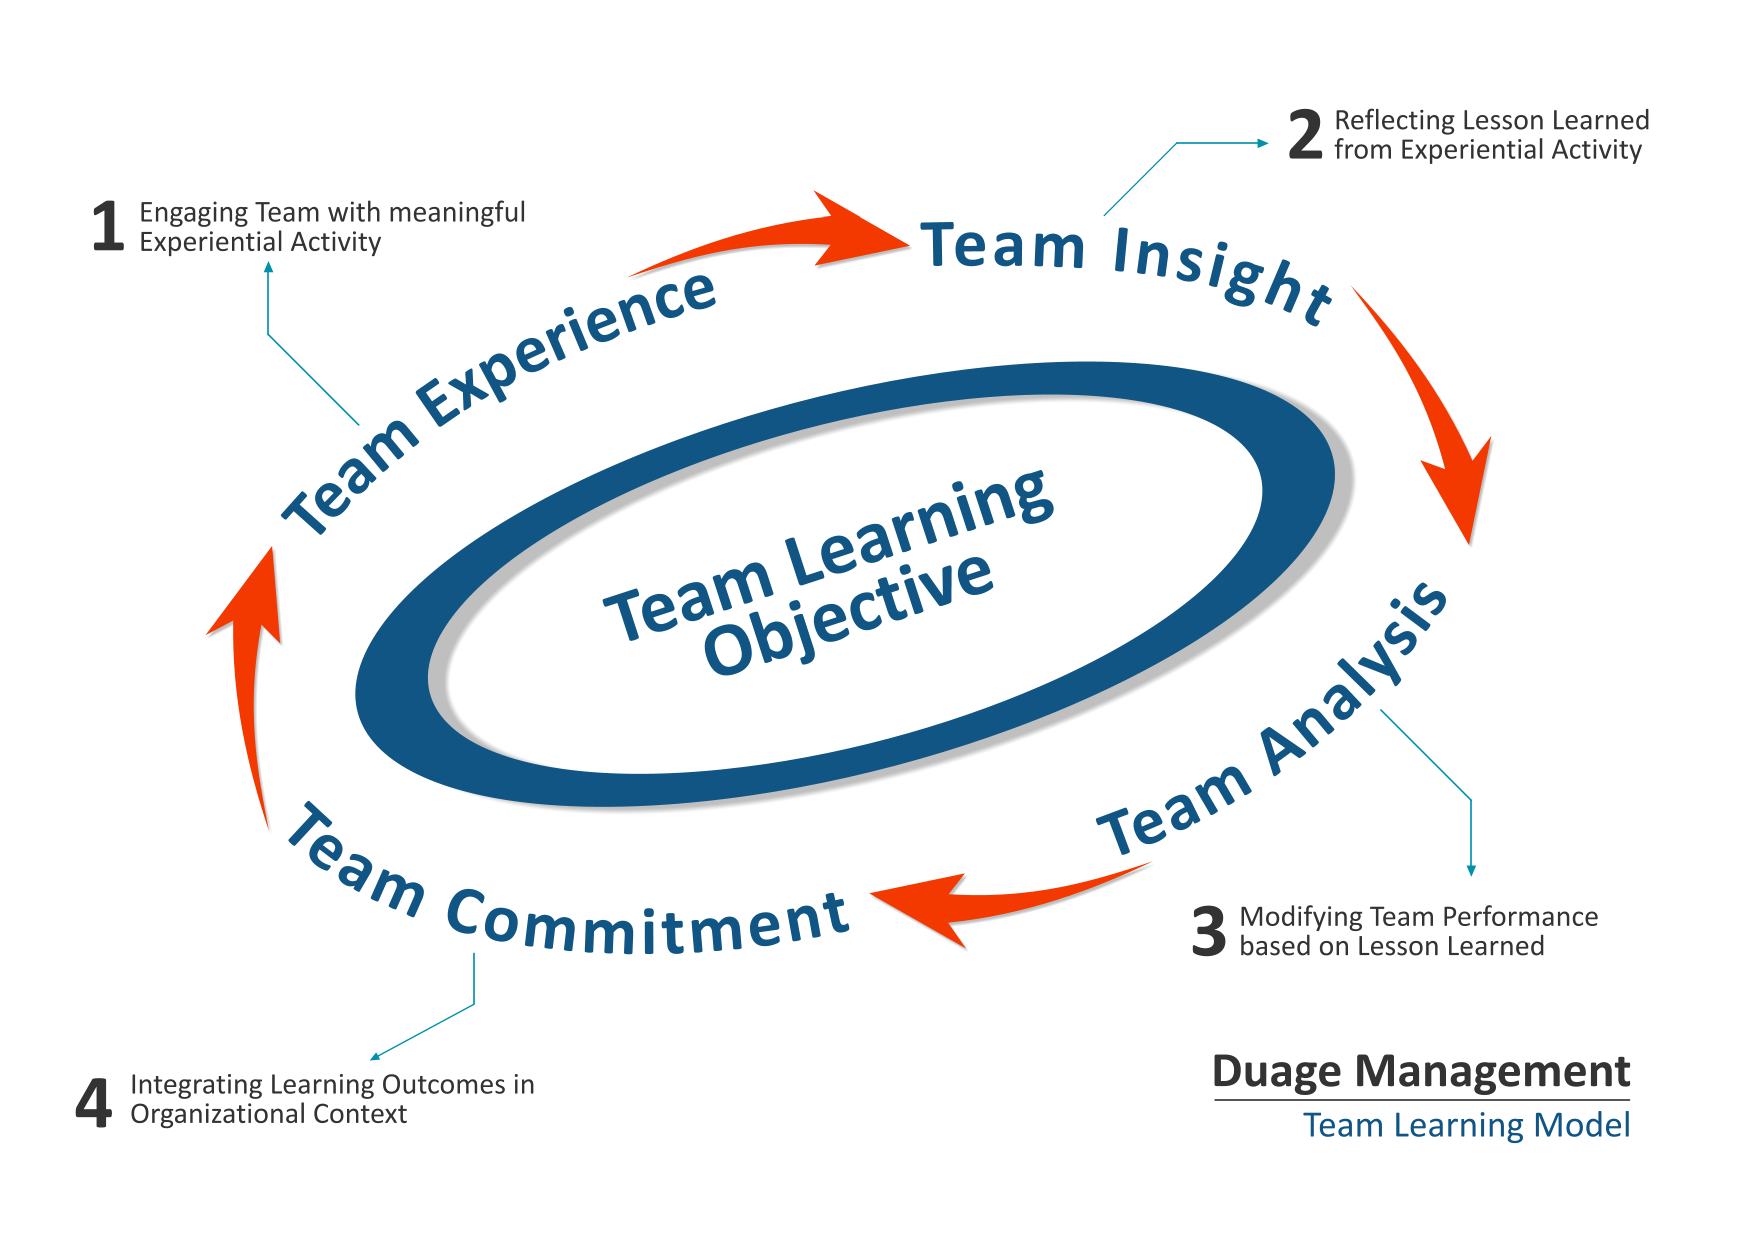 Team Learning Model - Duage Management